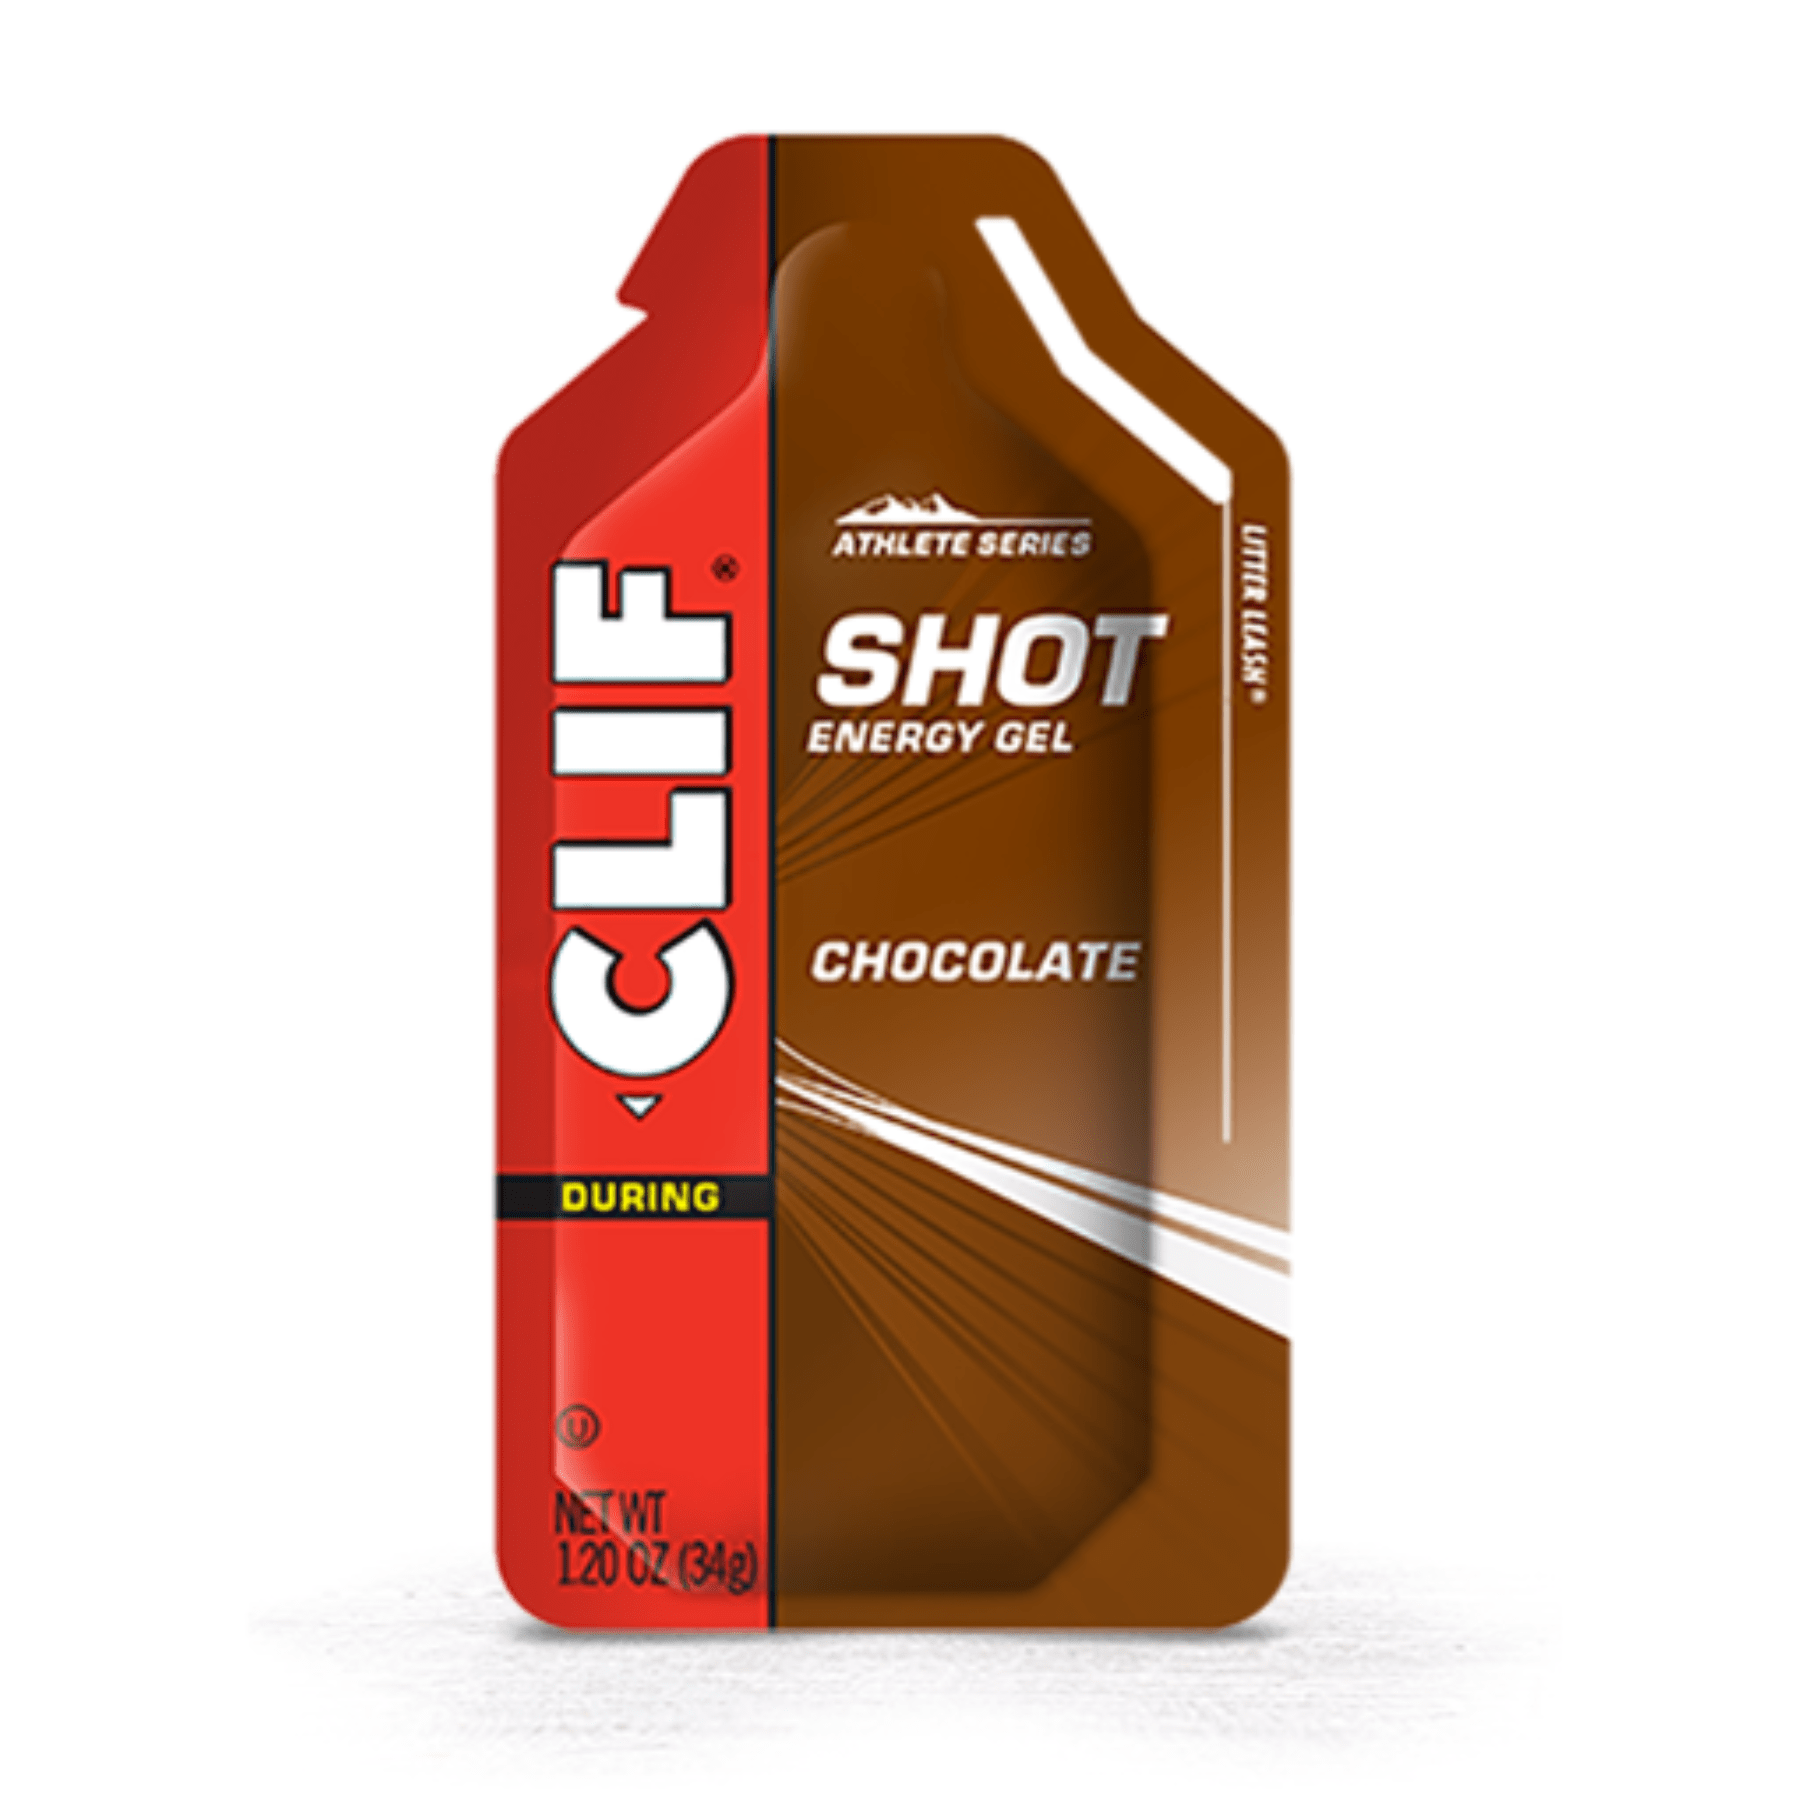 clif Energy Gel 1 / Chocolate SHOT Energy Gel CLIF611